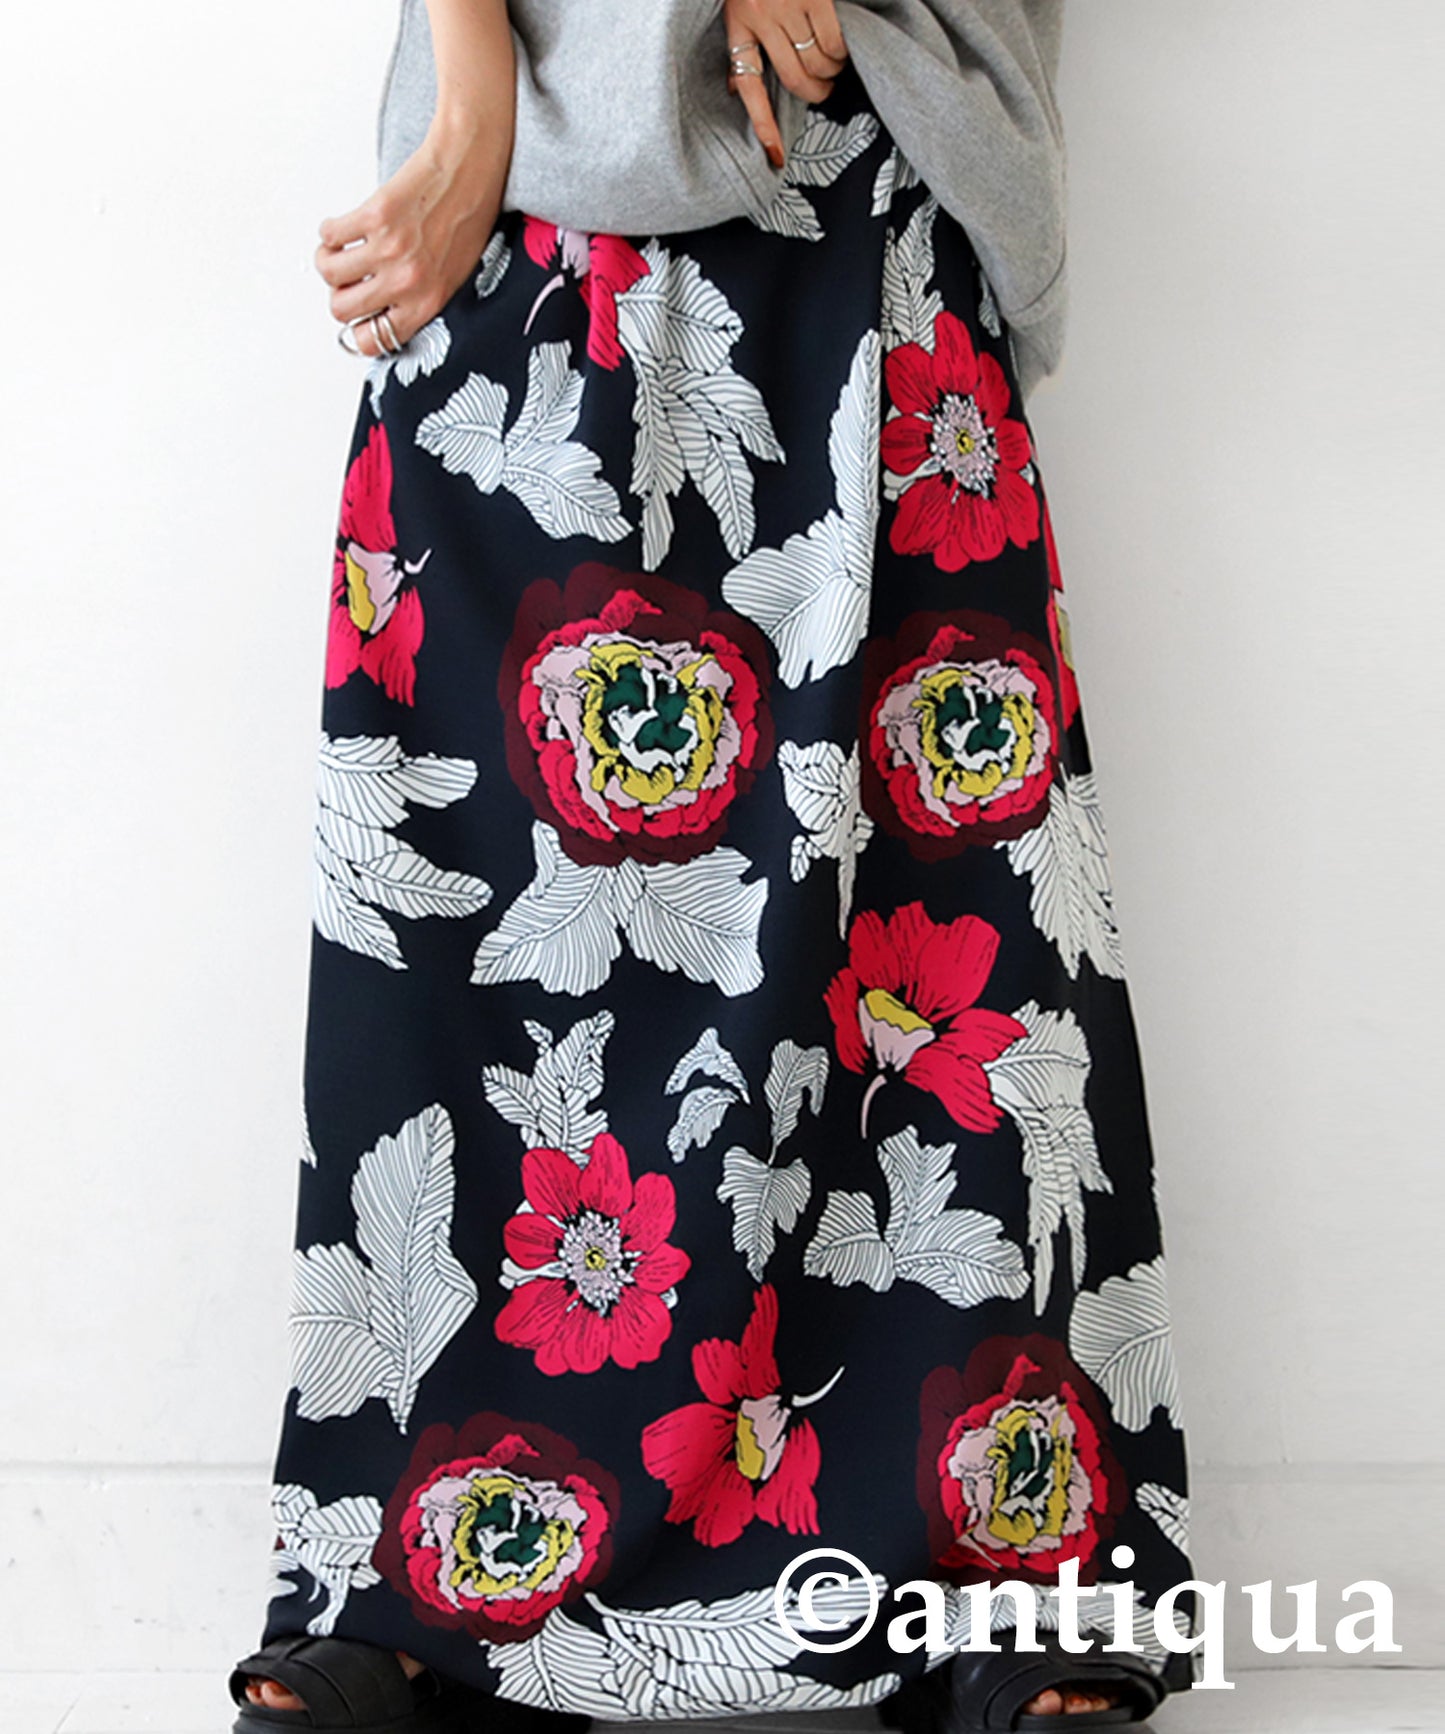 Retro and flower pattern Ladies long skirt